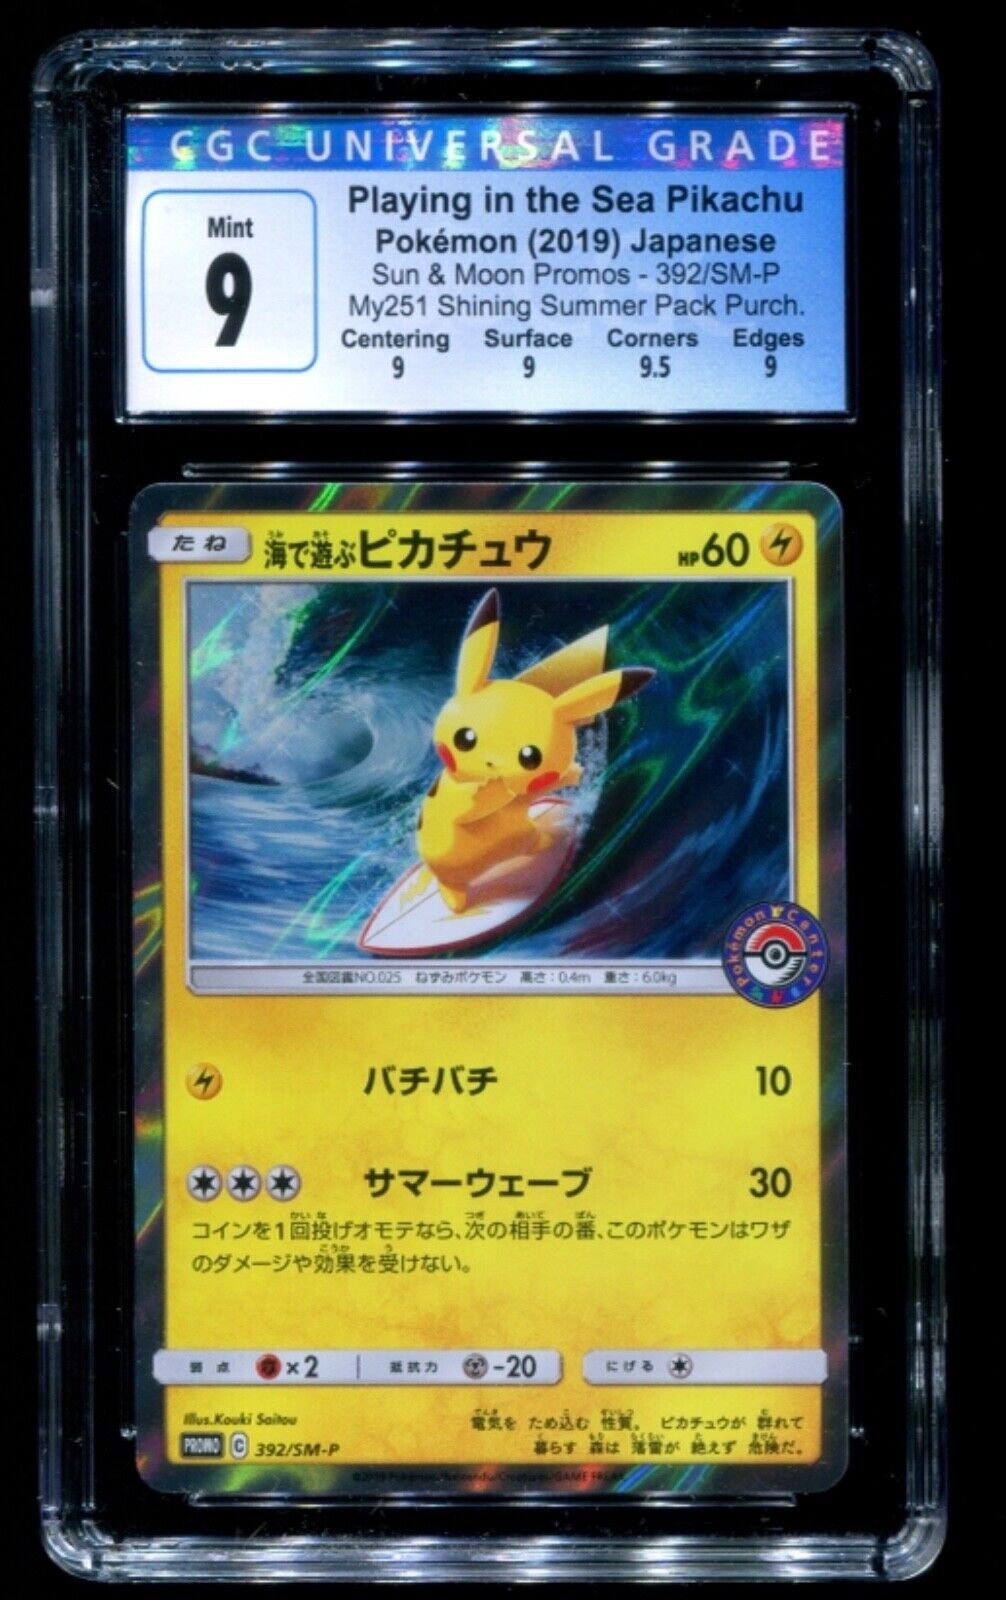 Details zu  Pokemon CGC 9 Mint Playing in the Sea Pikachu 392/SM-P Japanese Promo Card Günstiger Supergewinn